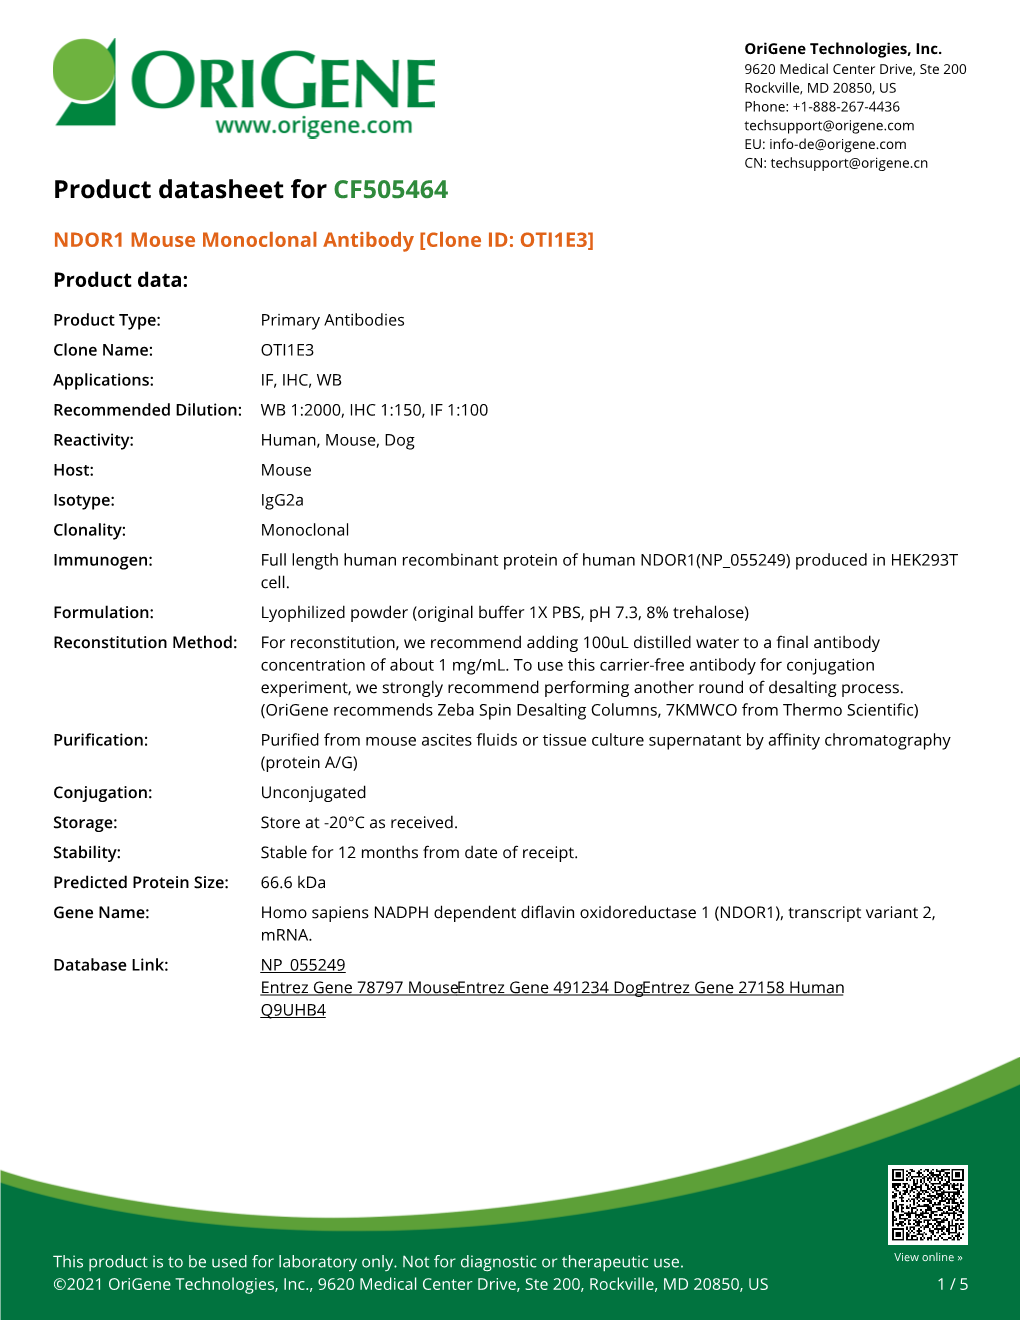 NDOR1 Mouse Monoclonal Antibody [Clone ID: OTI1E3] Product Data